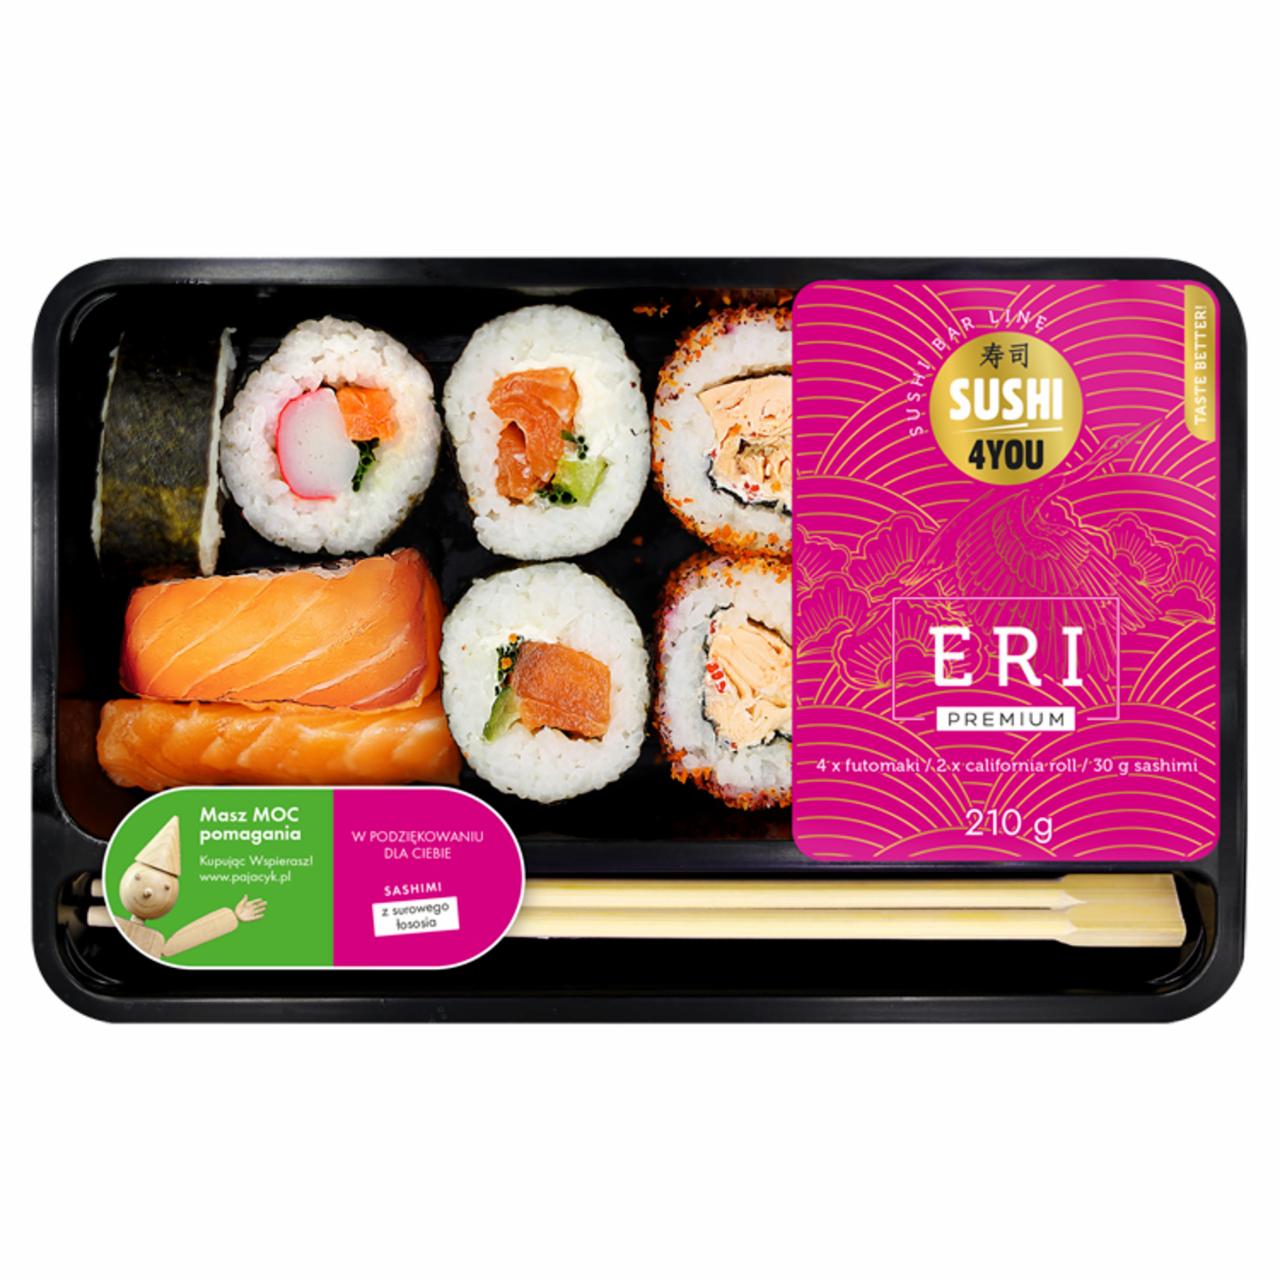 Zdjęcia - Sushi4You Premium Sushi Eri 210 g